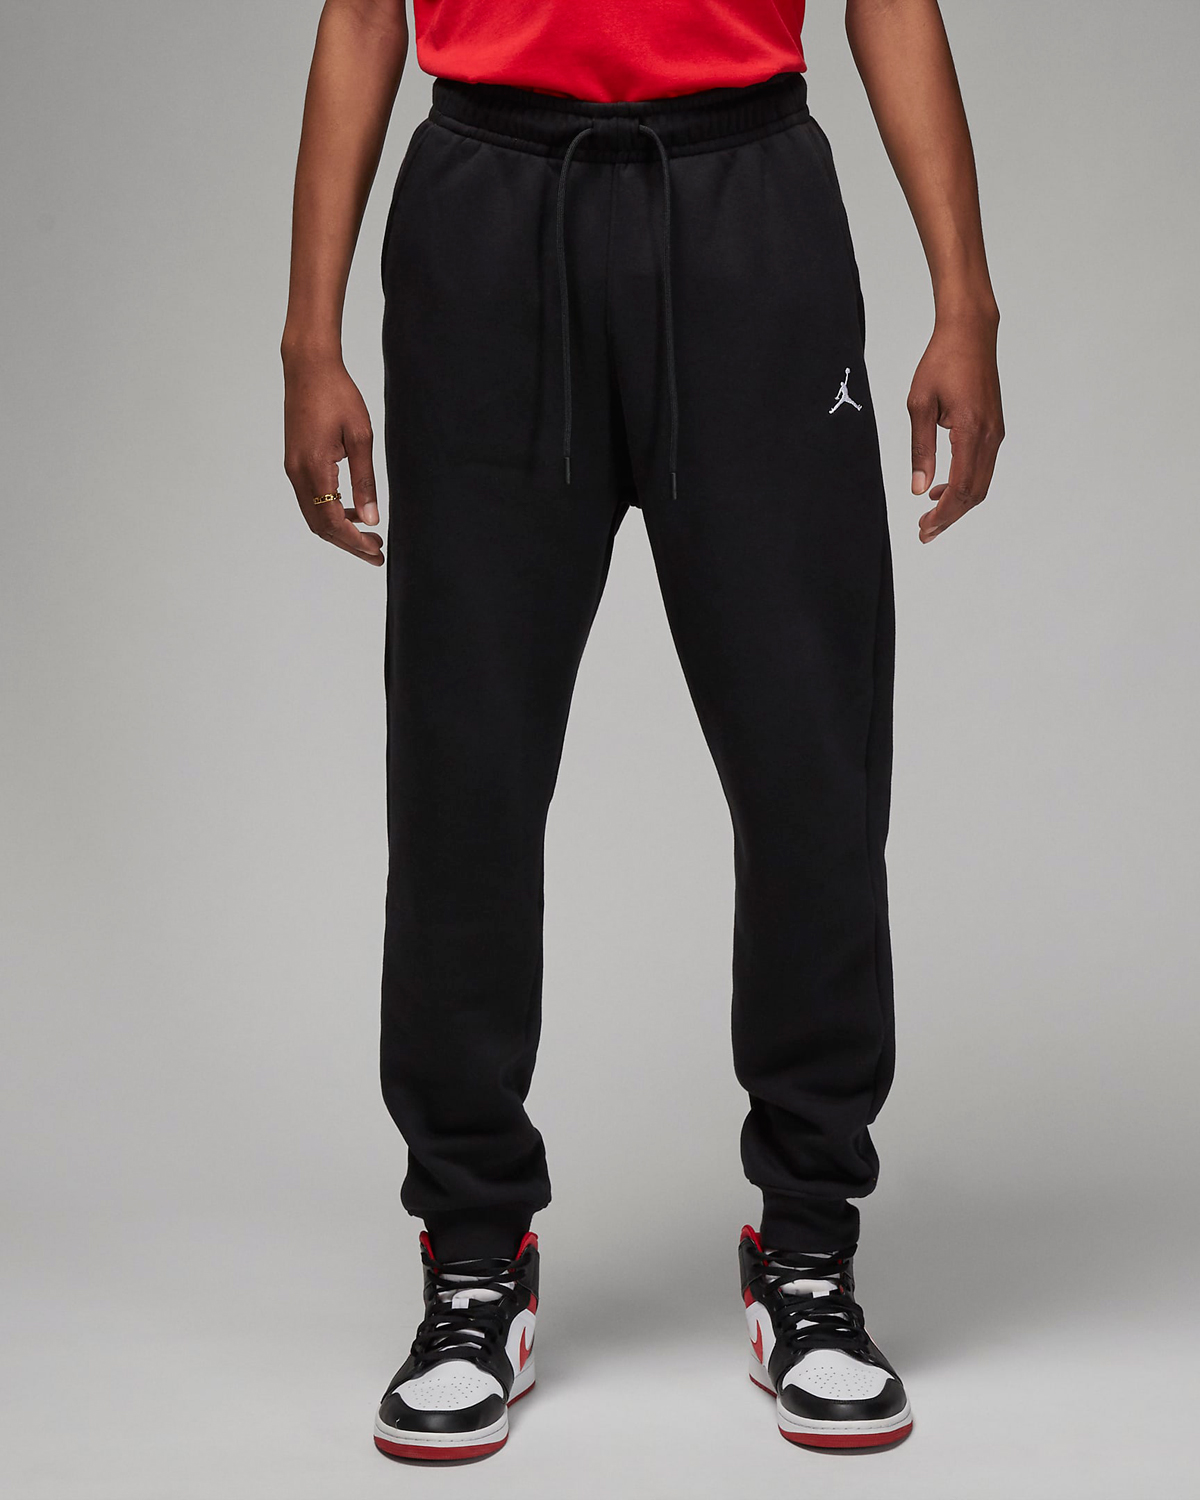 Jordan-Essentials-Fleece-Pants-Black-White-1